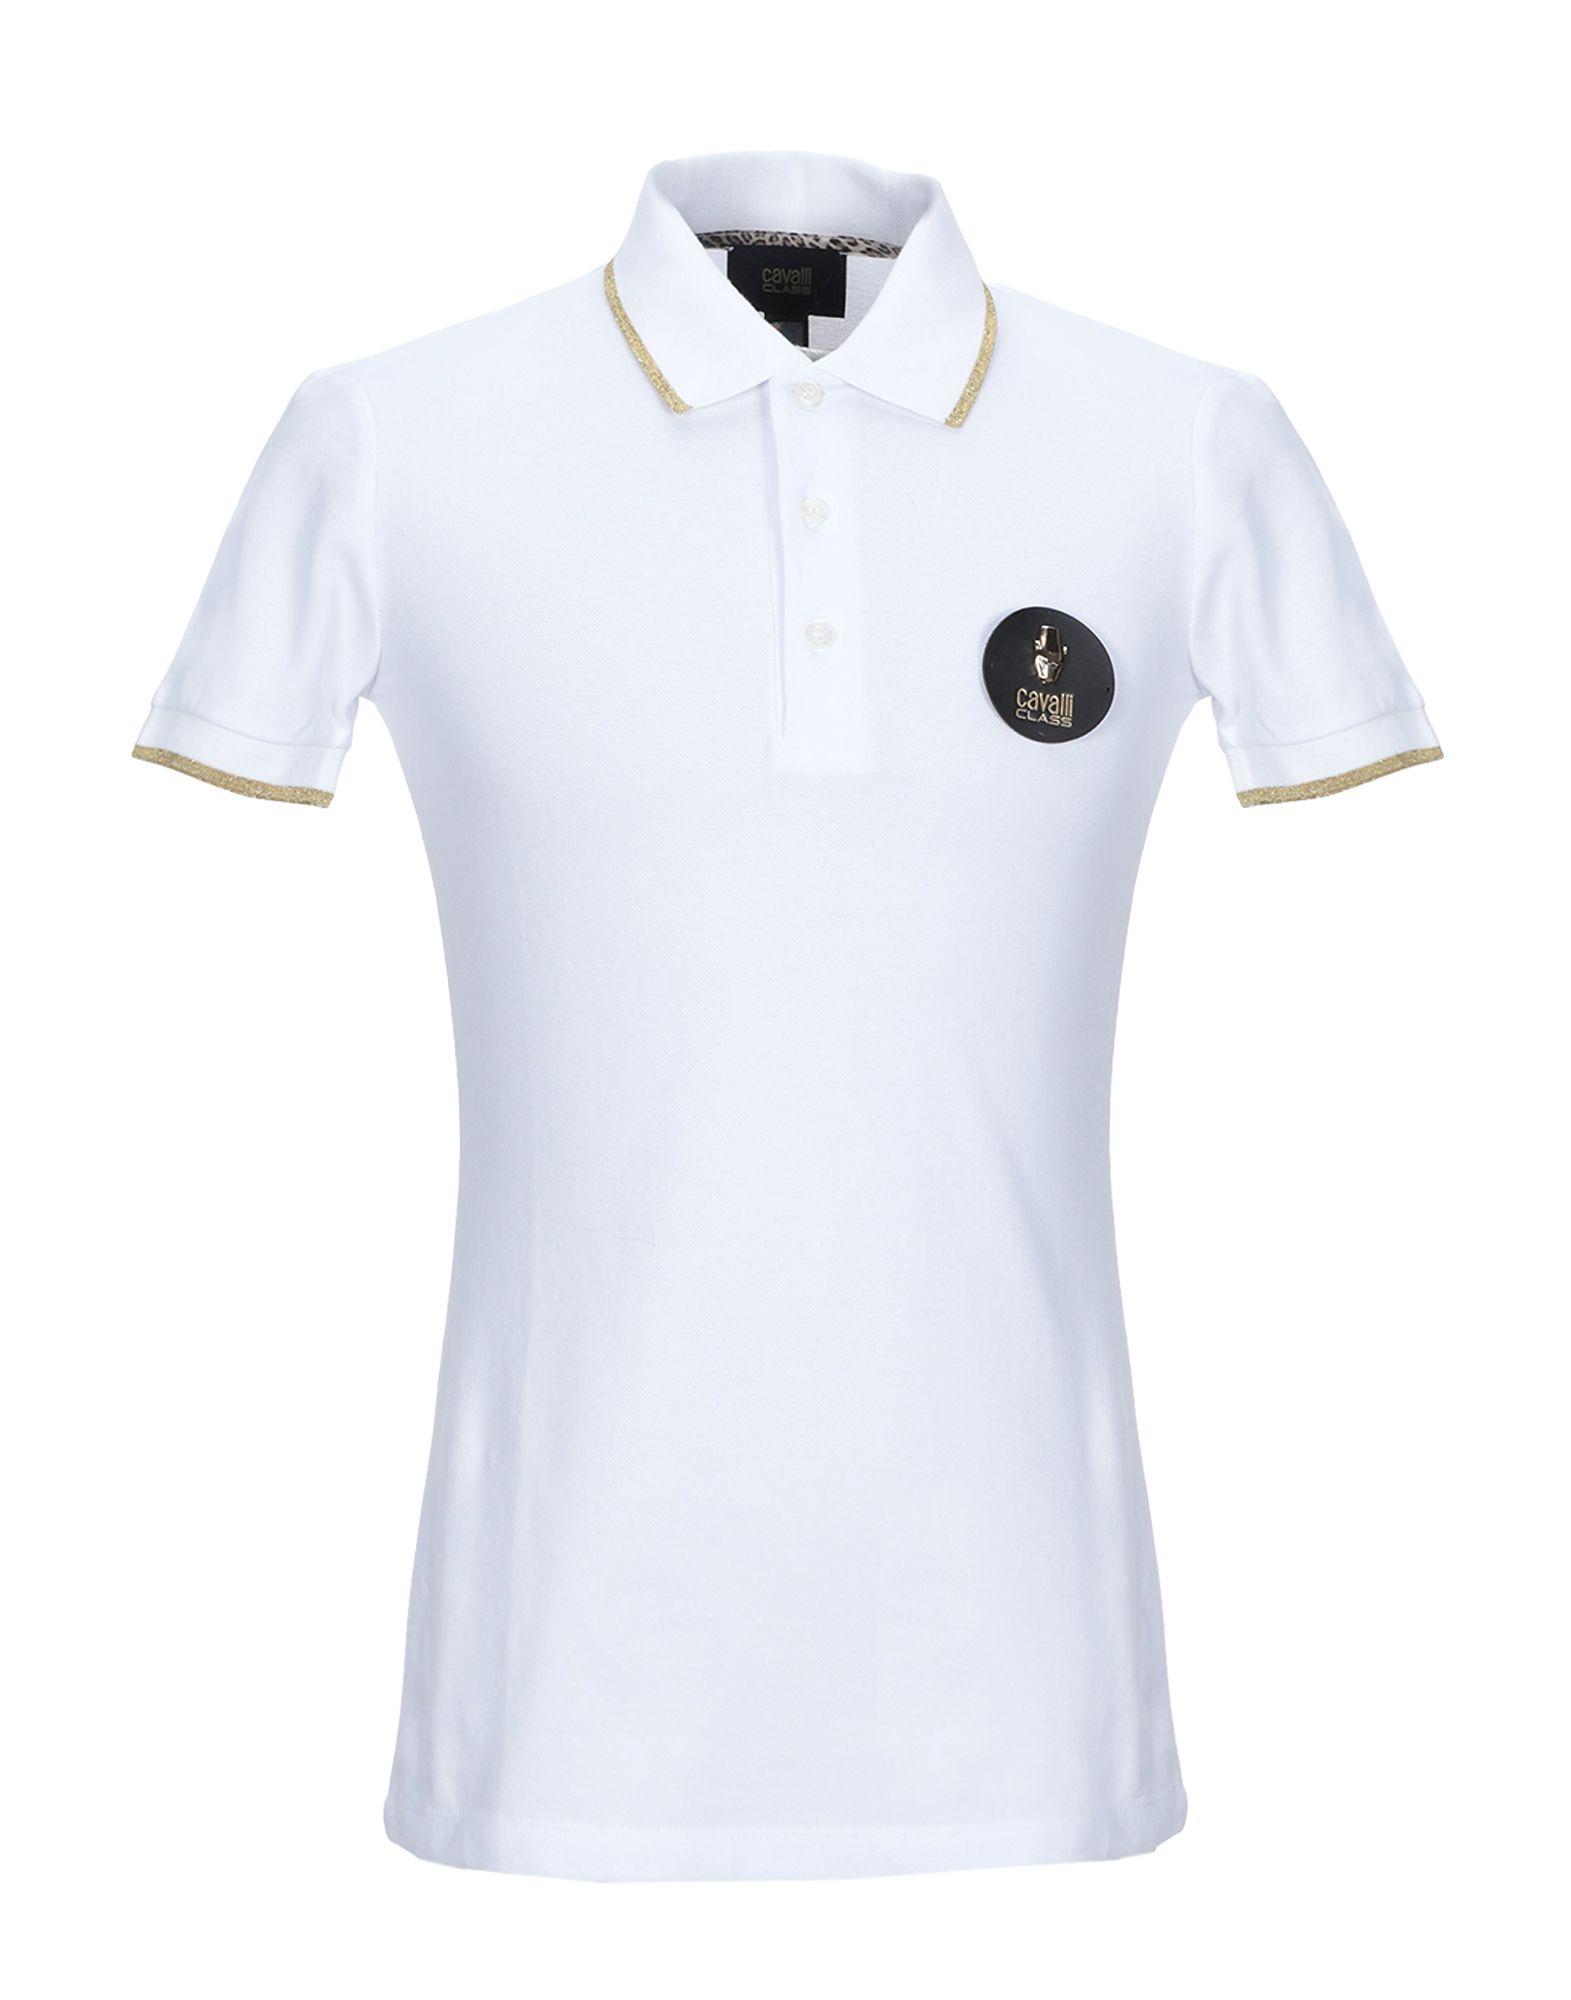 Class Roberto Cavalli Cotton Polo Shirt in White for Men - Lyst